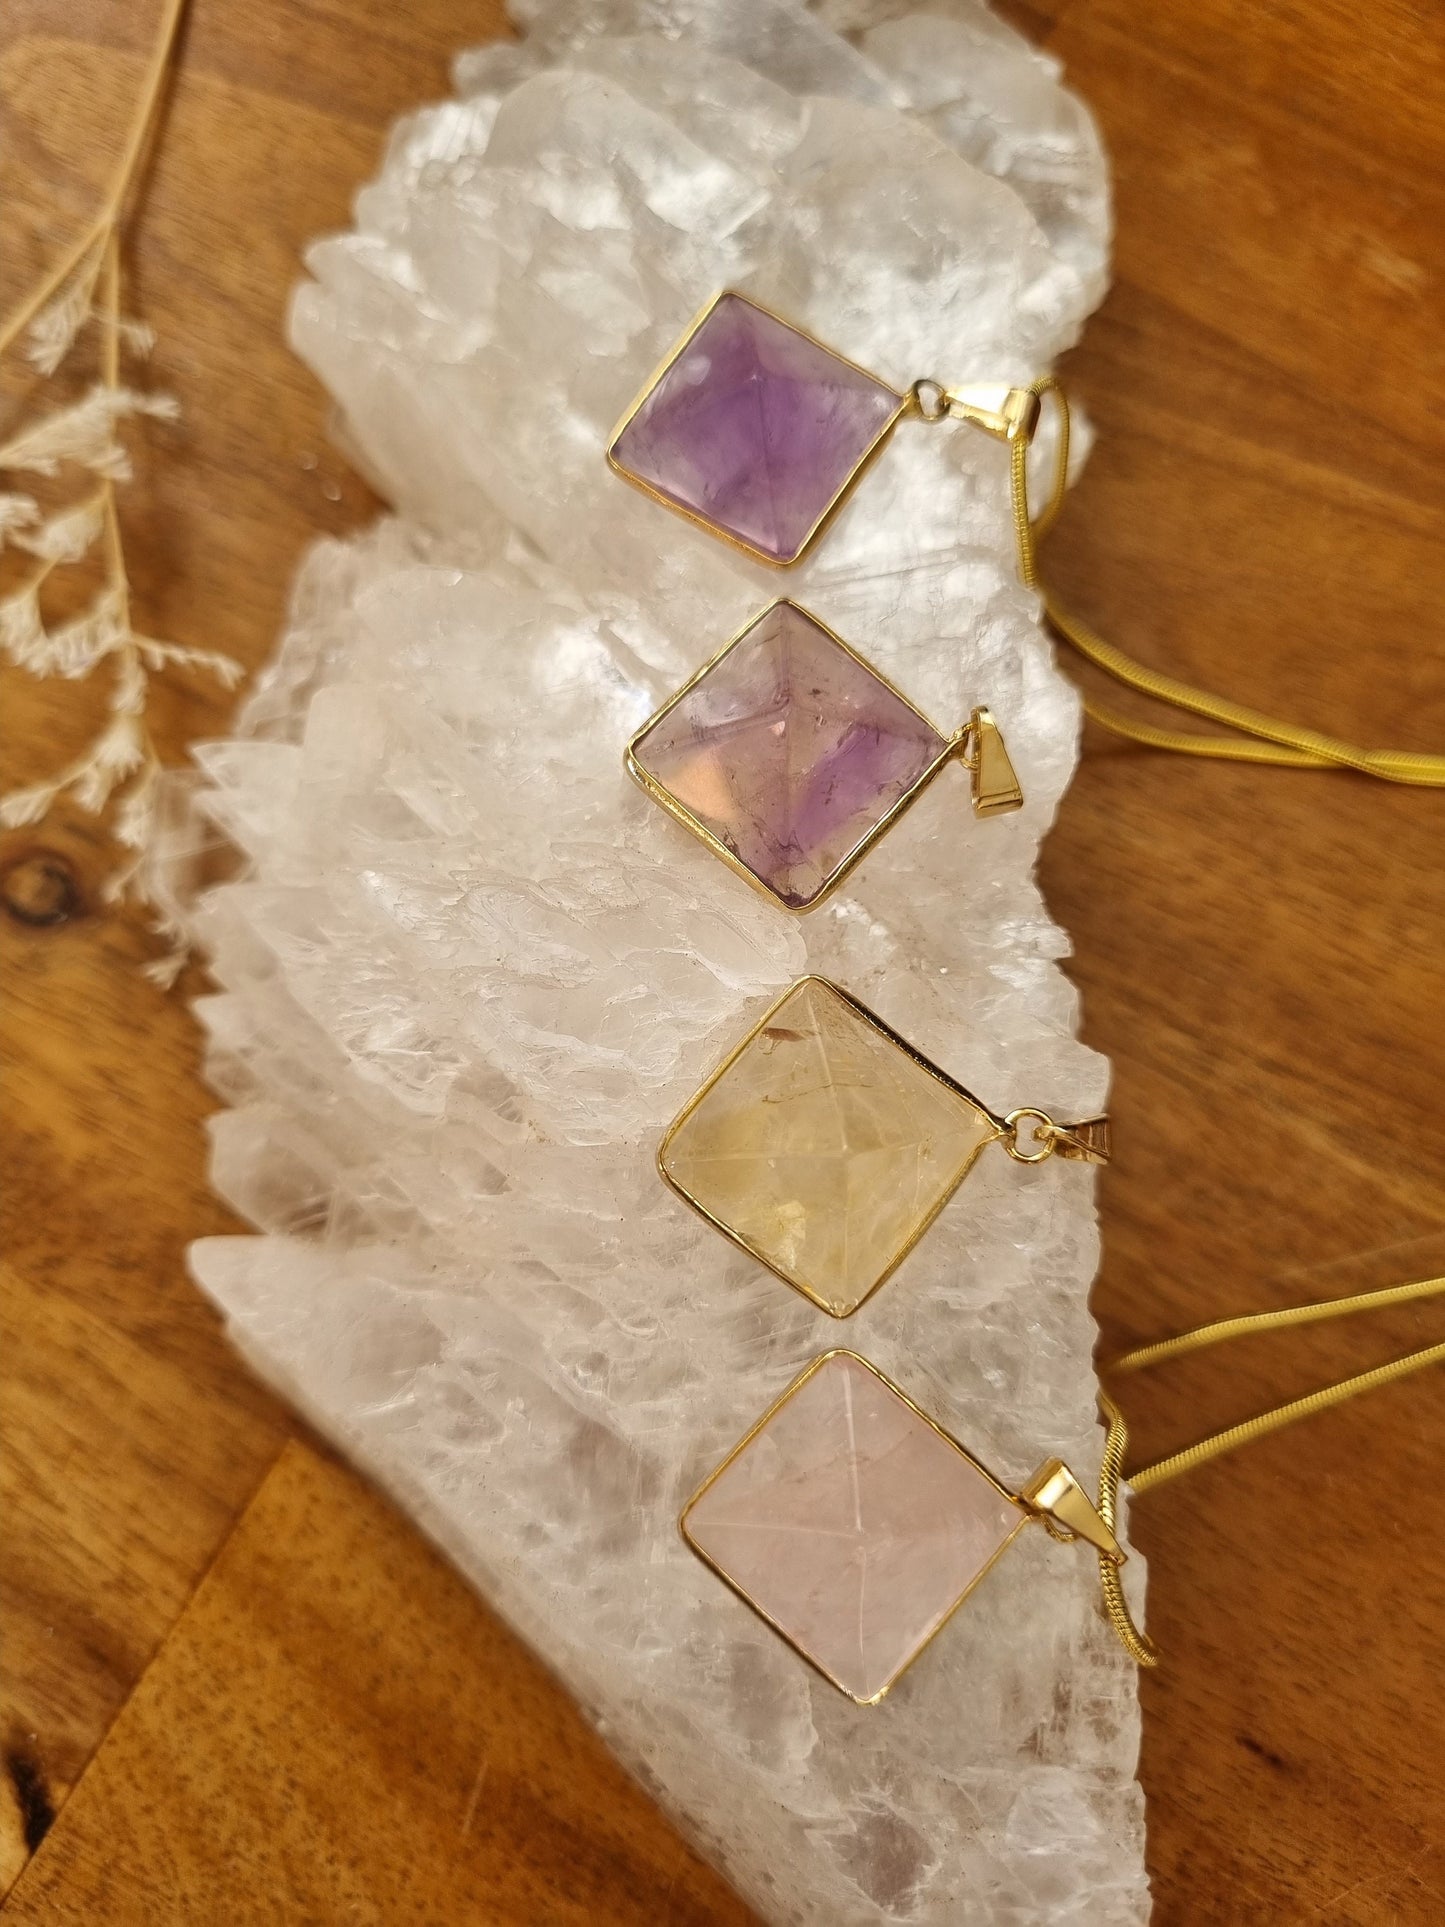 Pyramid necklace in Amethyst, Ametrine, Citrine and Rose quartz